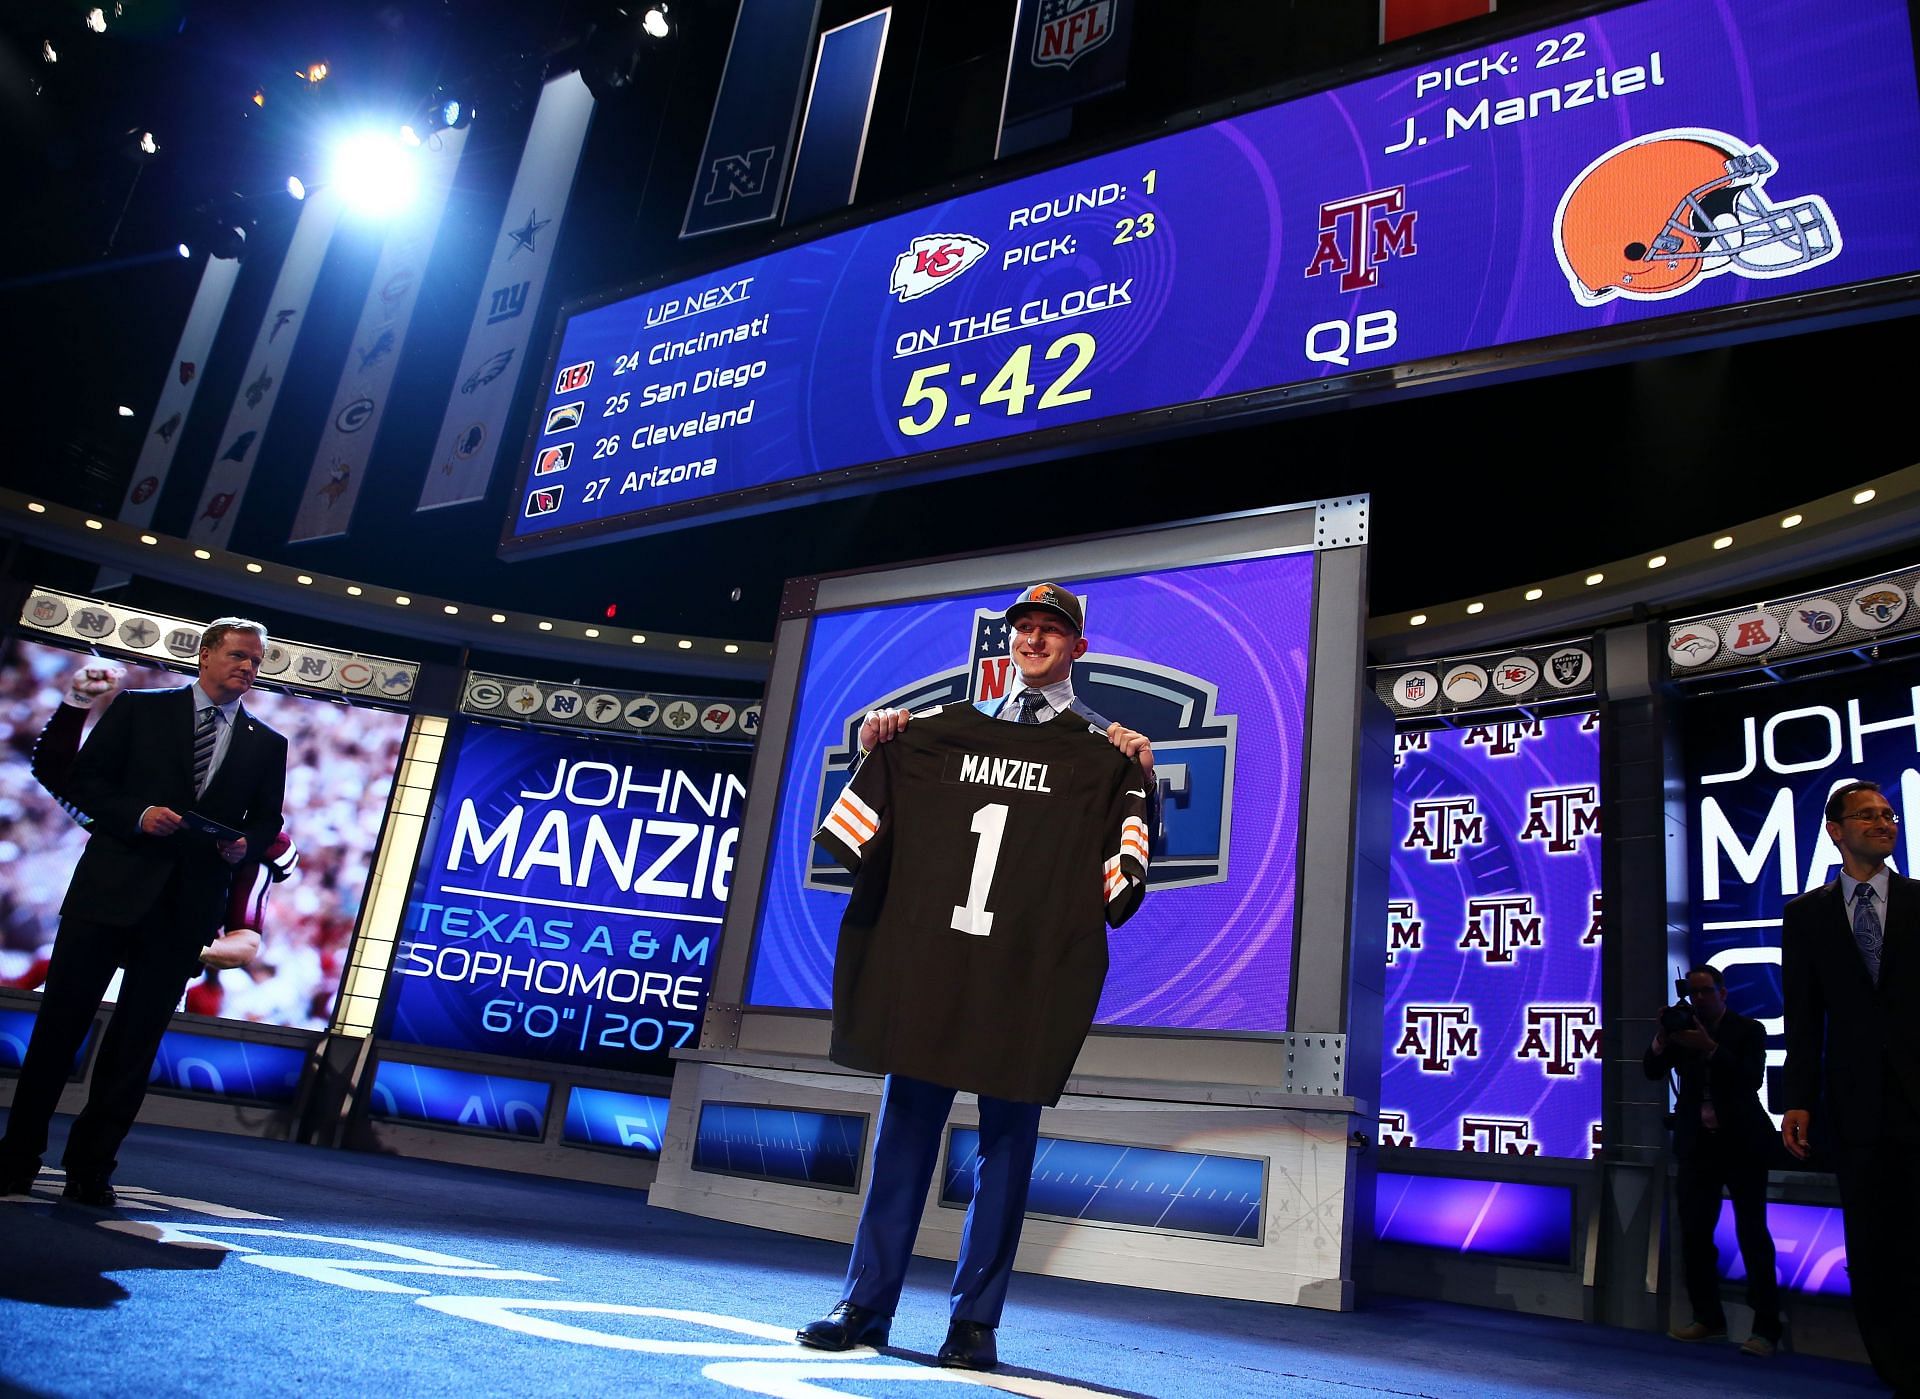 Manziel at the 2014 NFL Draft